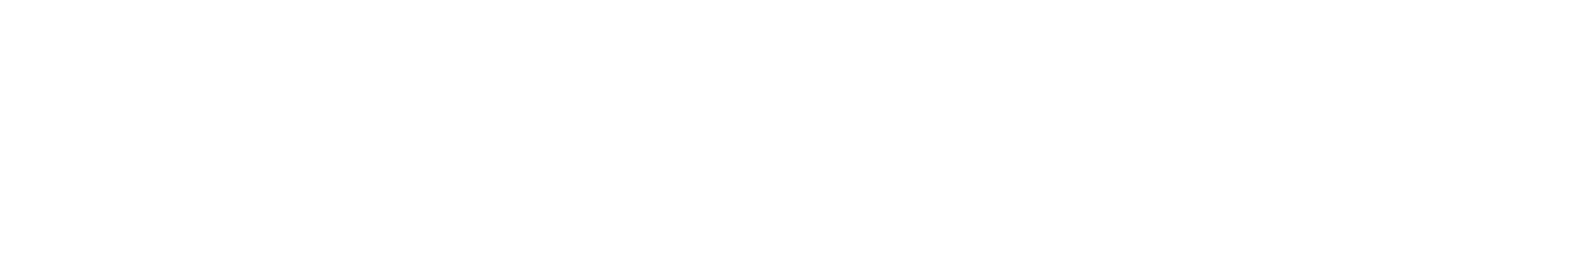 Chris Zorzos Graphic Header